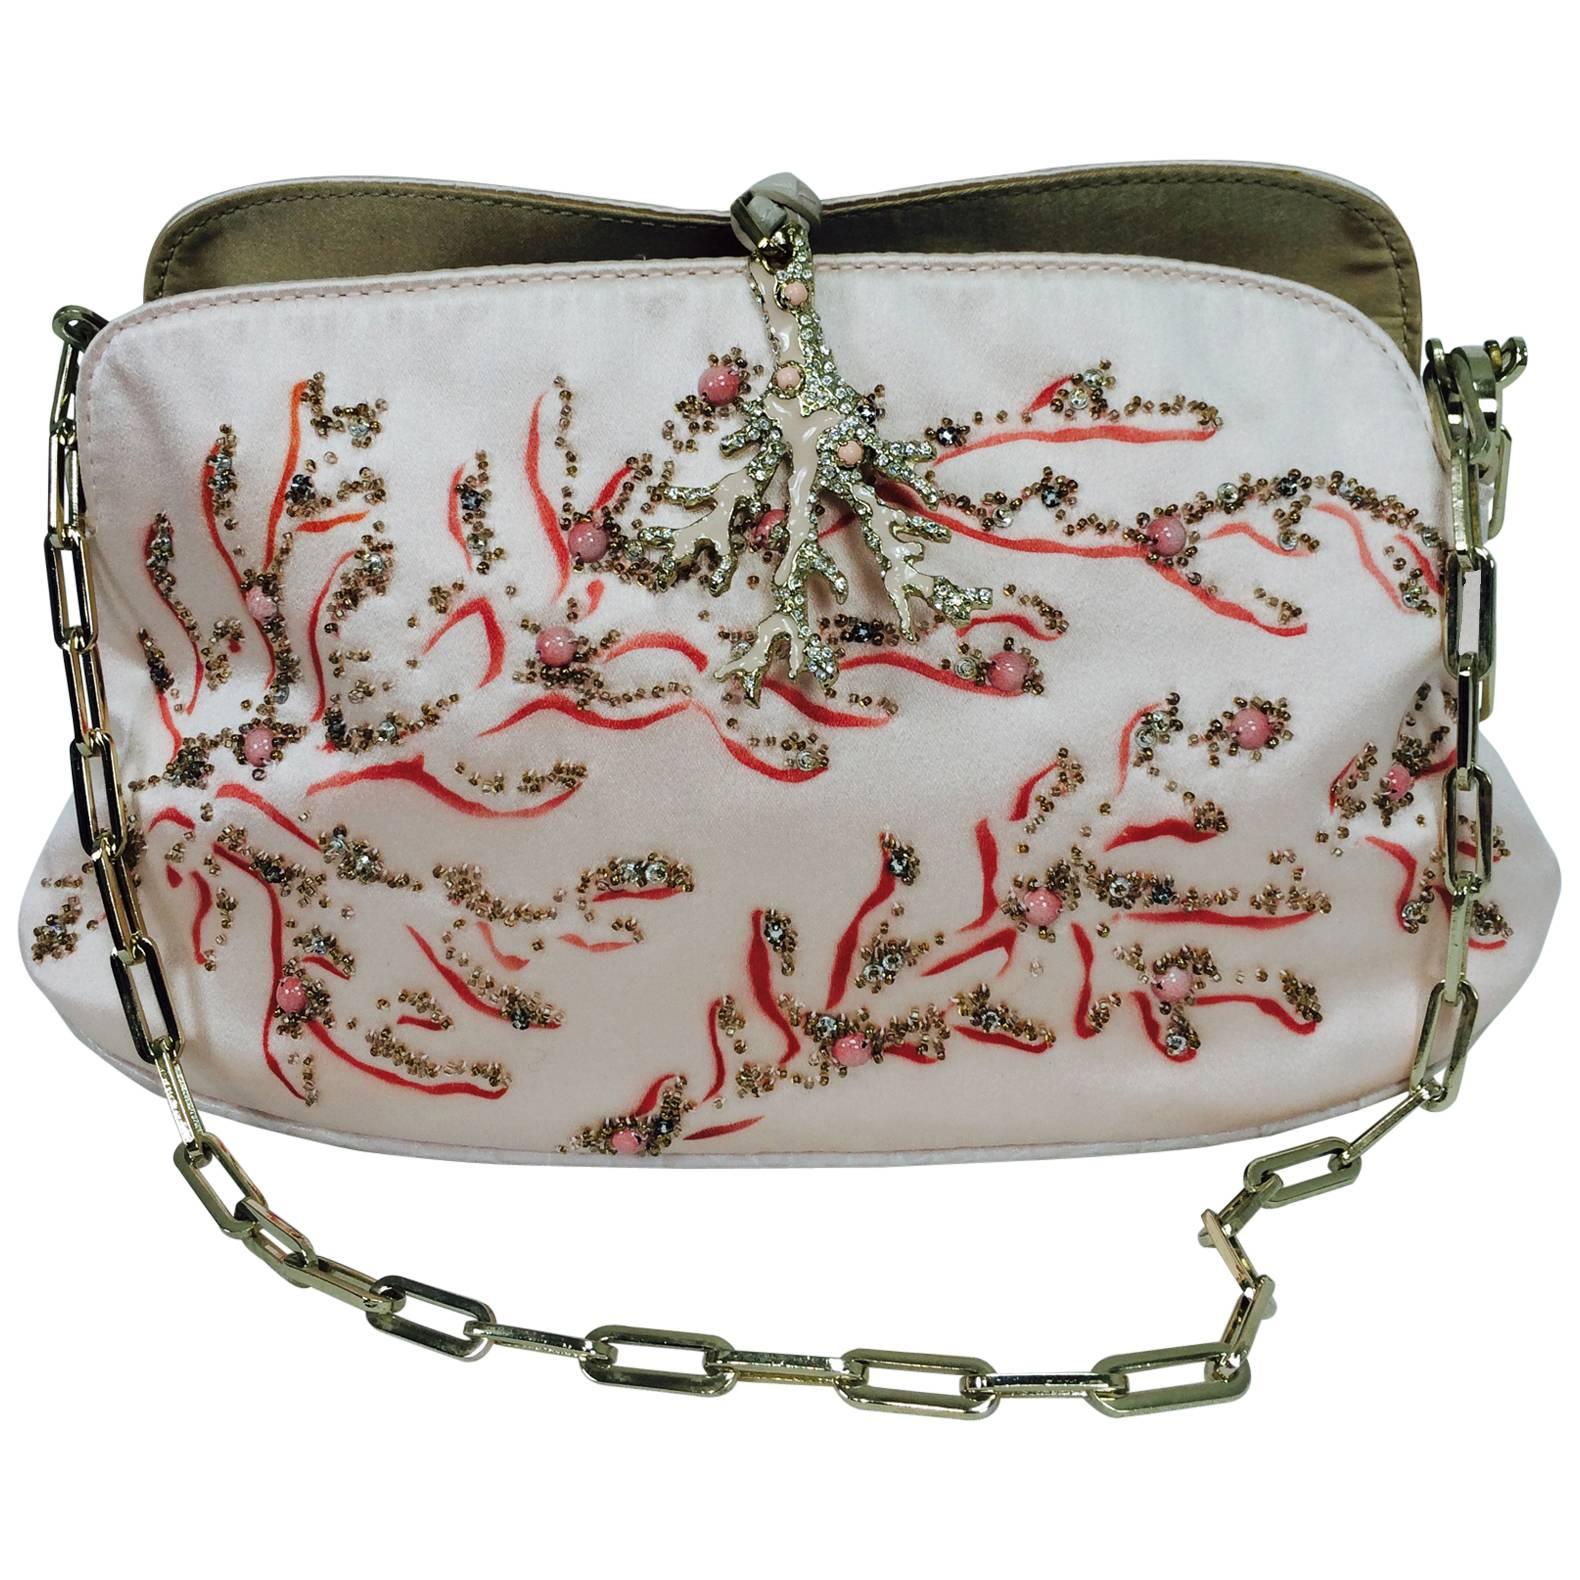 Valentino Garavani hand painted & beaded coral jewel evening bag